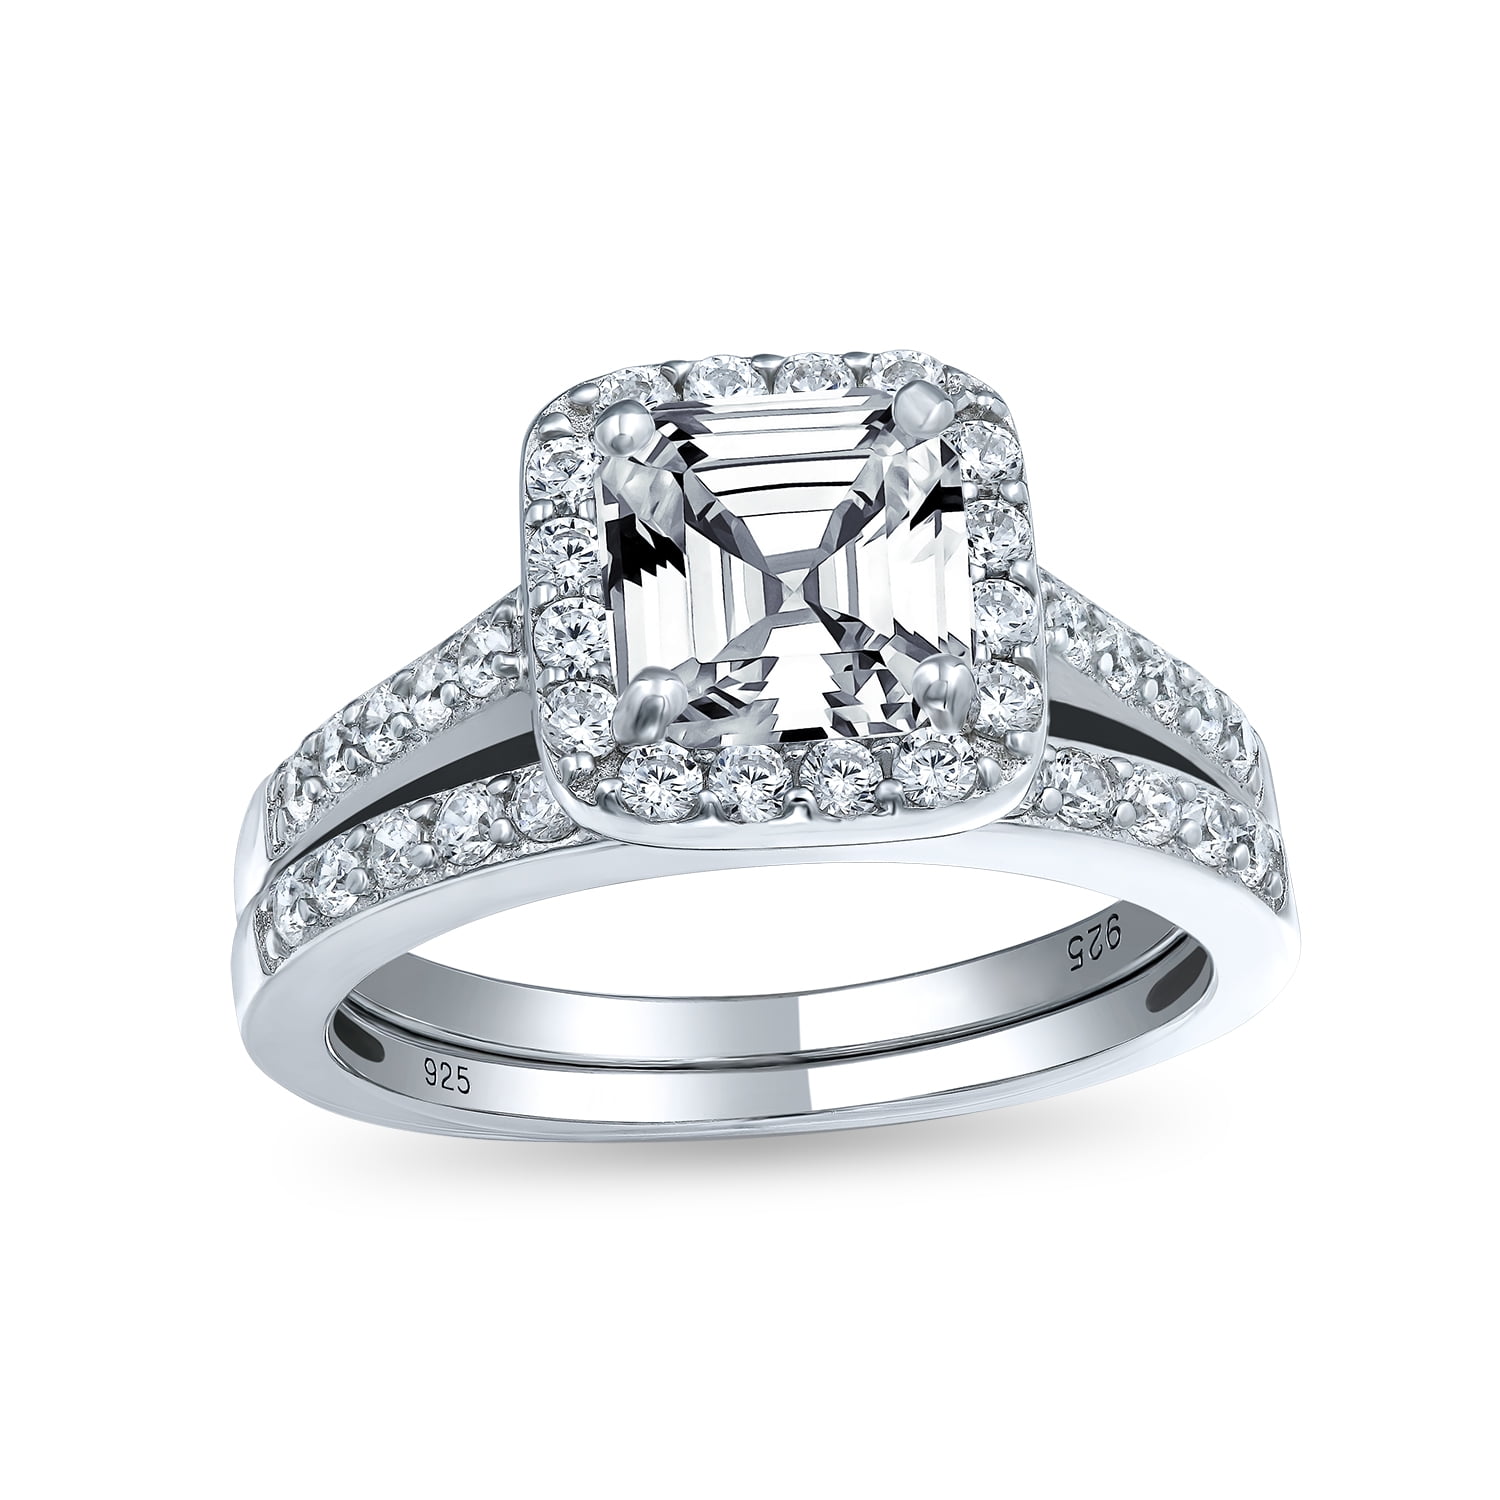 Vintage Art Deco Antique Engagement Wedding Ring 2Ct Diamond 925 Sterling Silver